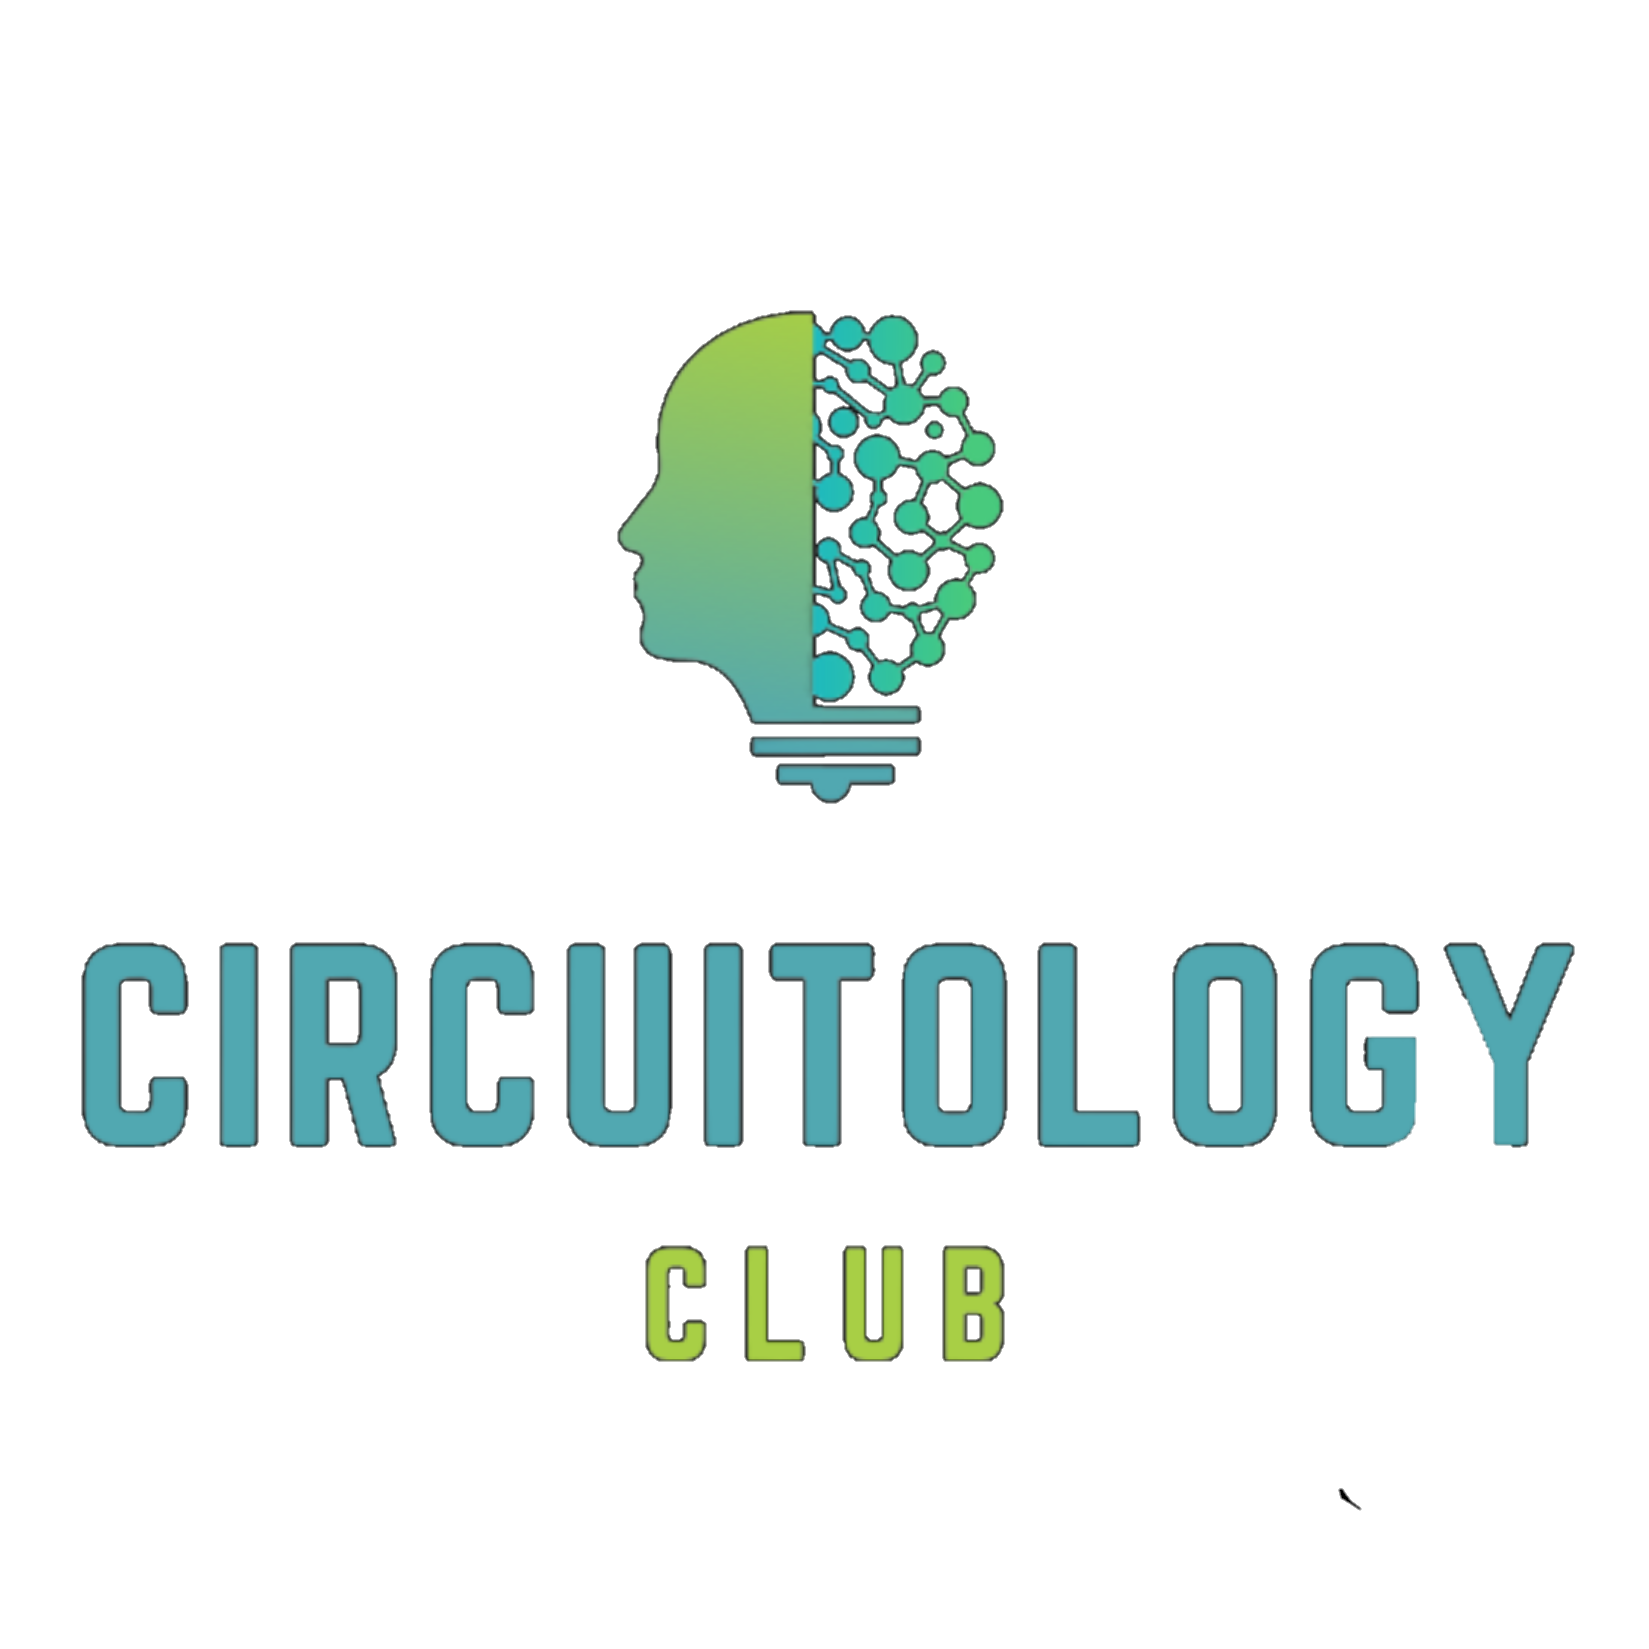 Circuitology Club